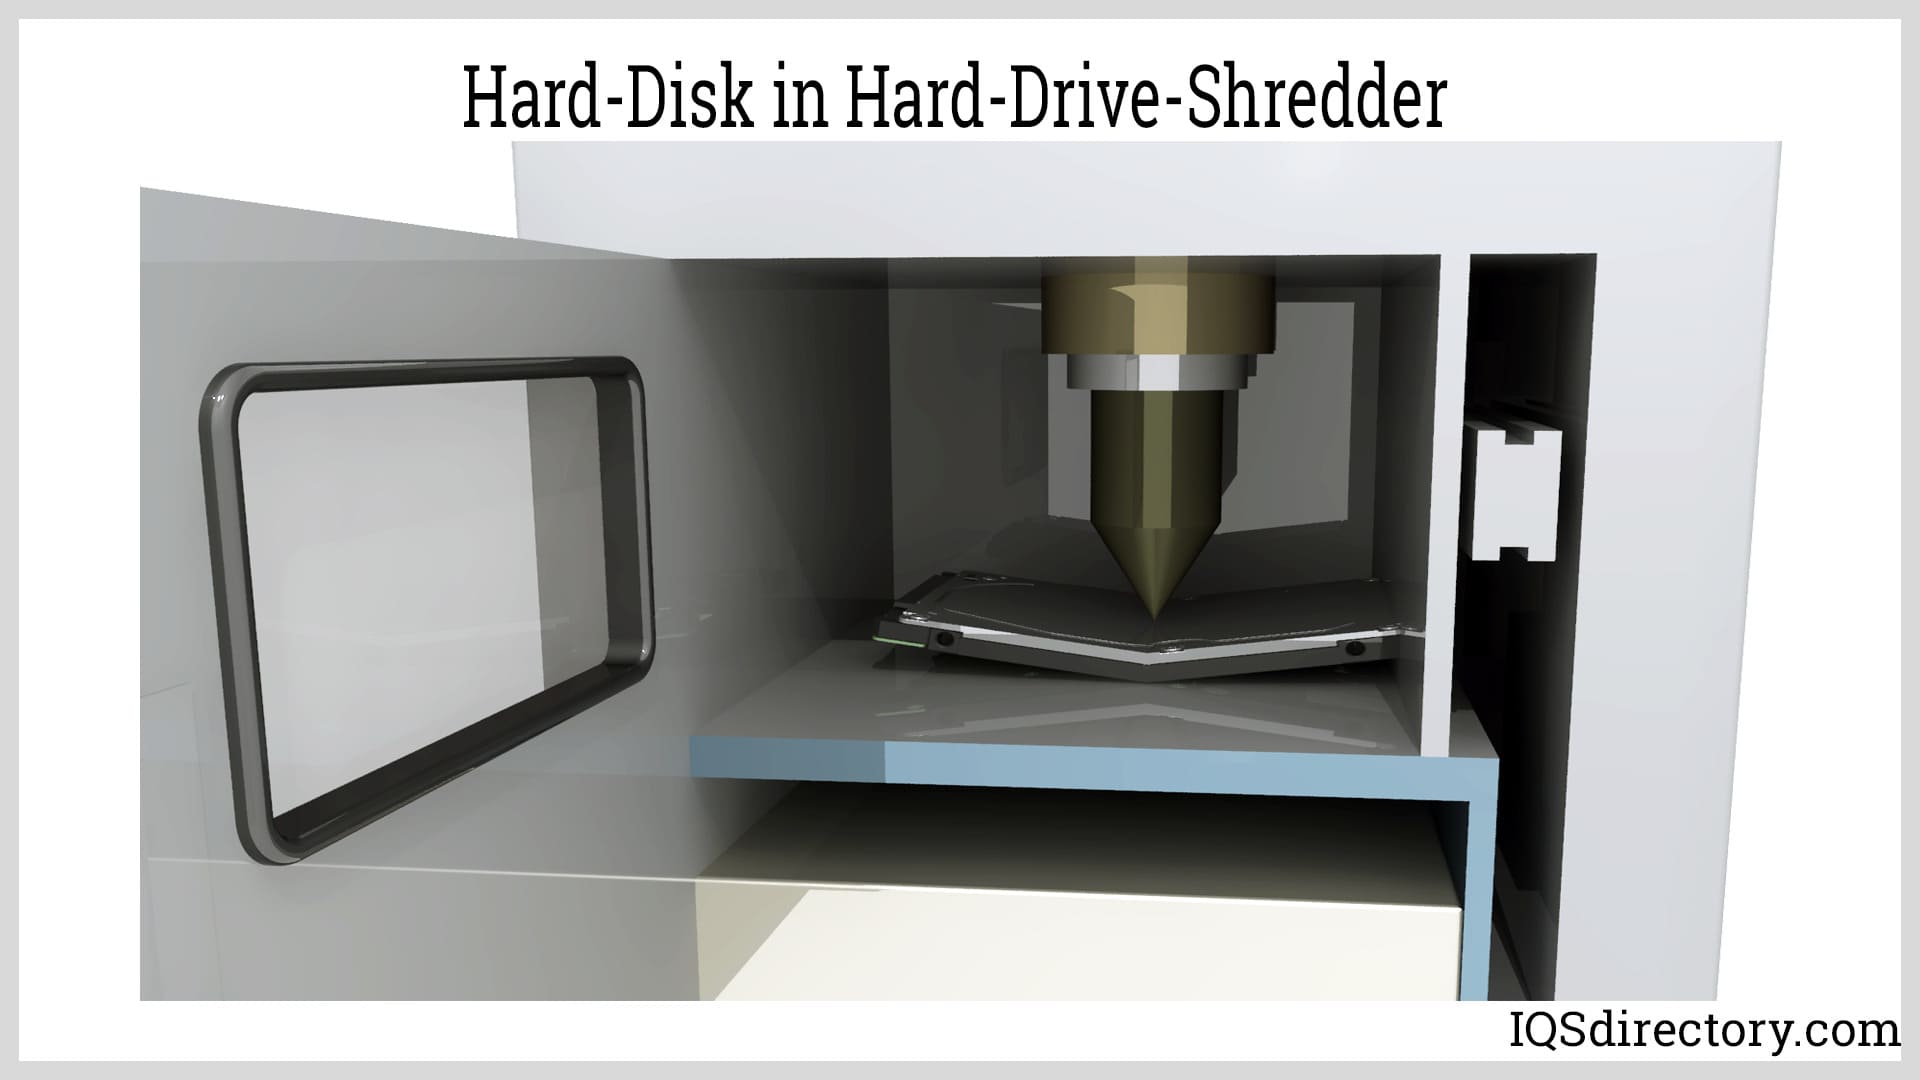 Hard-Disk in Hard-Drive-Shredder